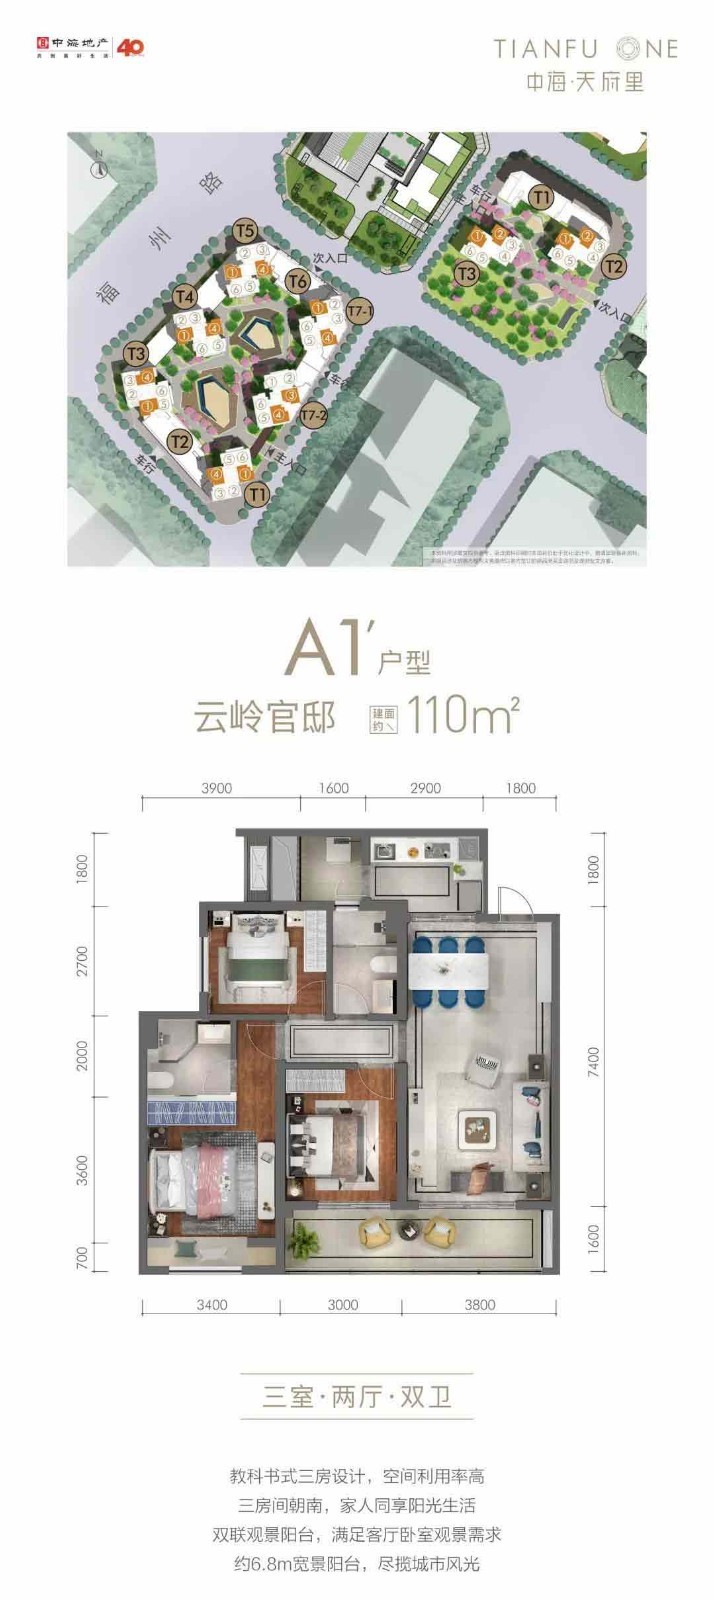 A1’户型-三室两厅两卫-110㎡.jpg